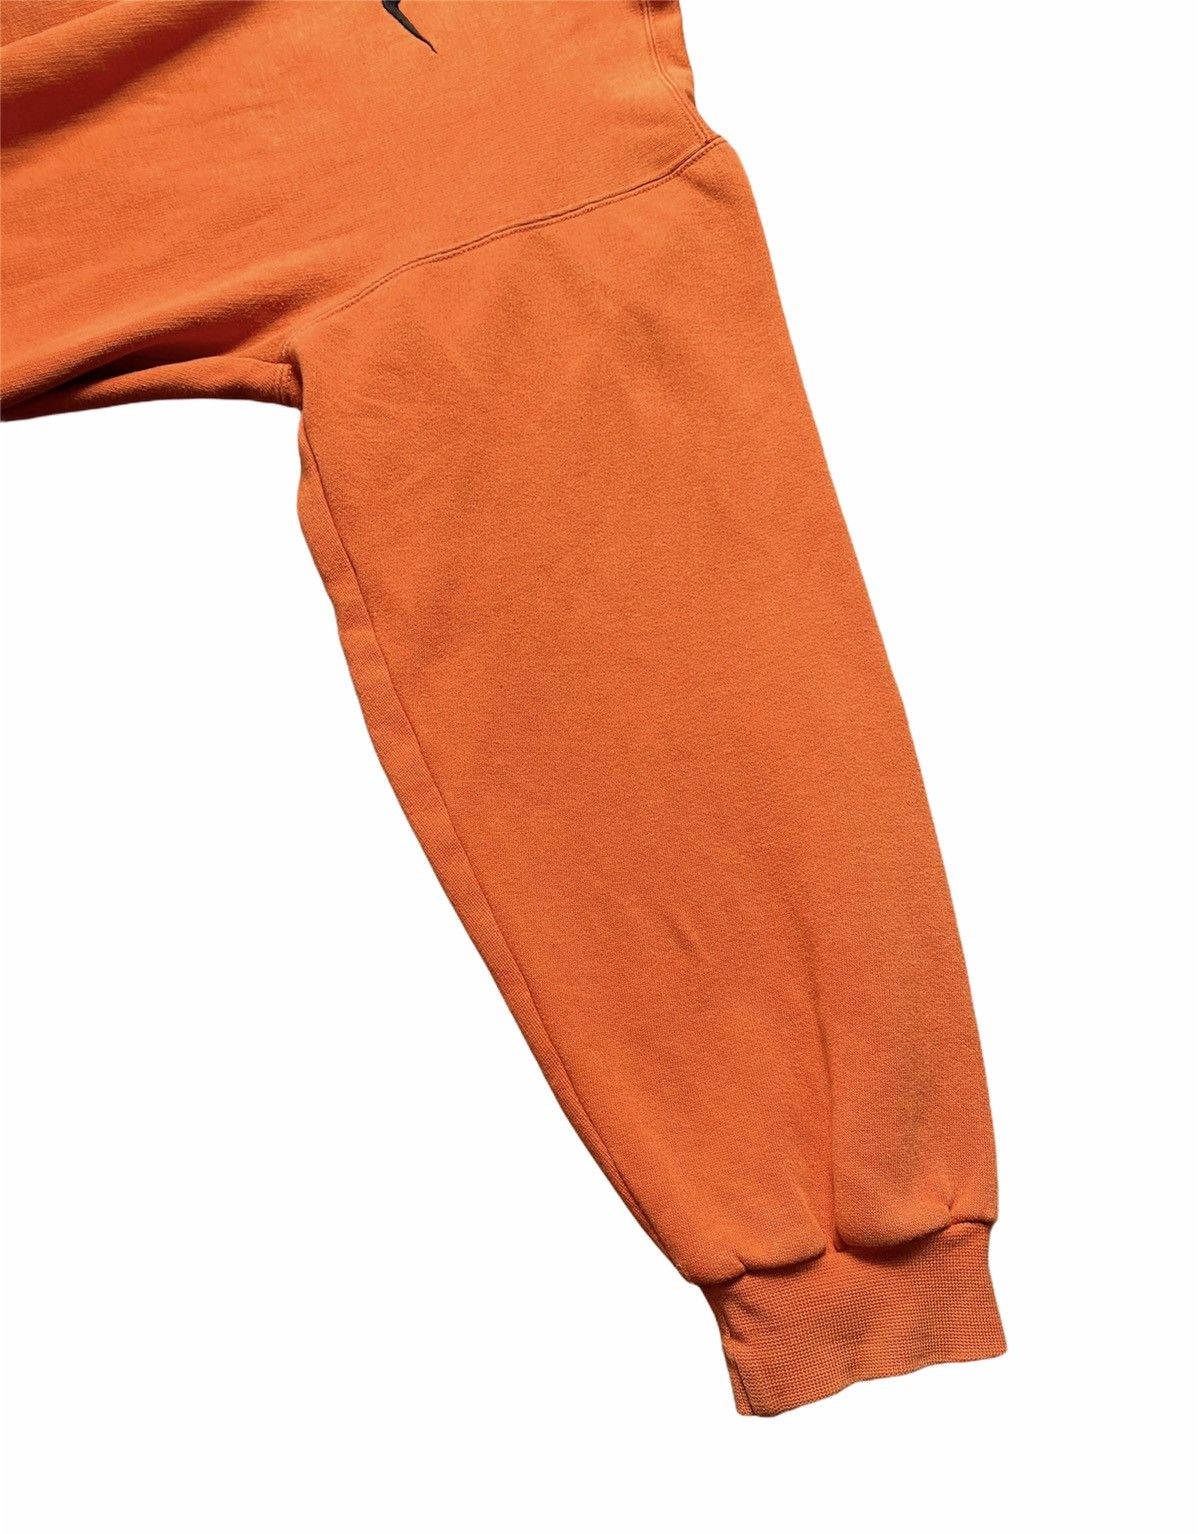 Nike Vintage Nike small swoosh orange hoodie Size US S / EU 44-46 / 1 - 5 Thumbnail